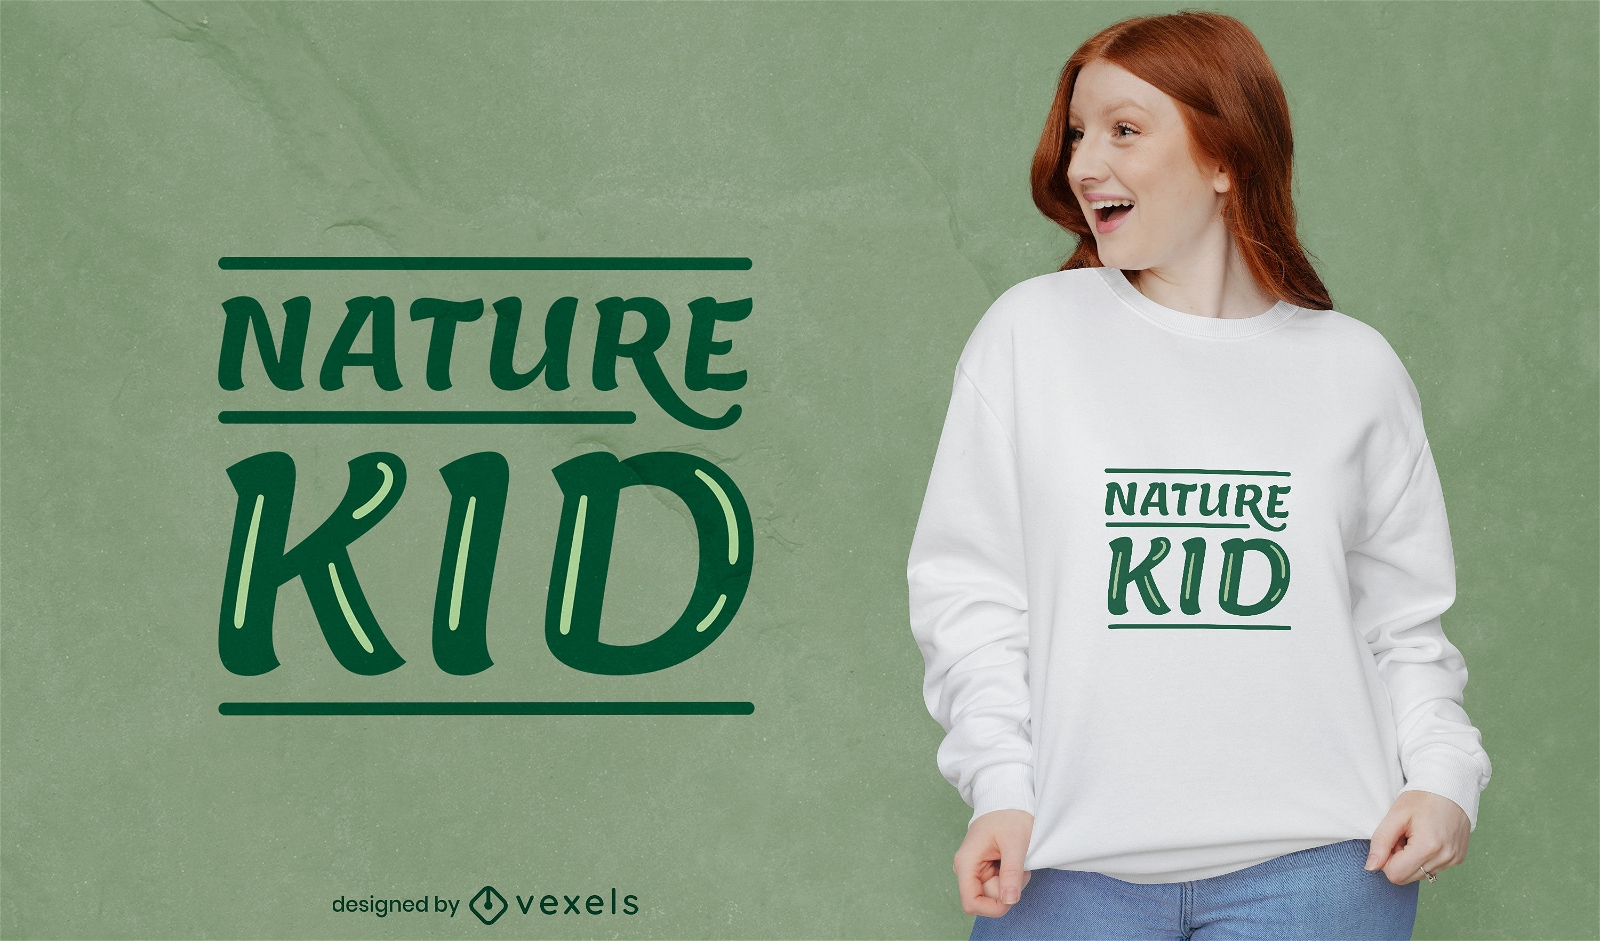 Nature kid quote t-shirt design